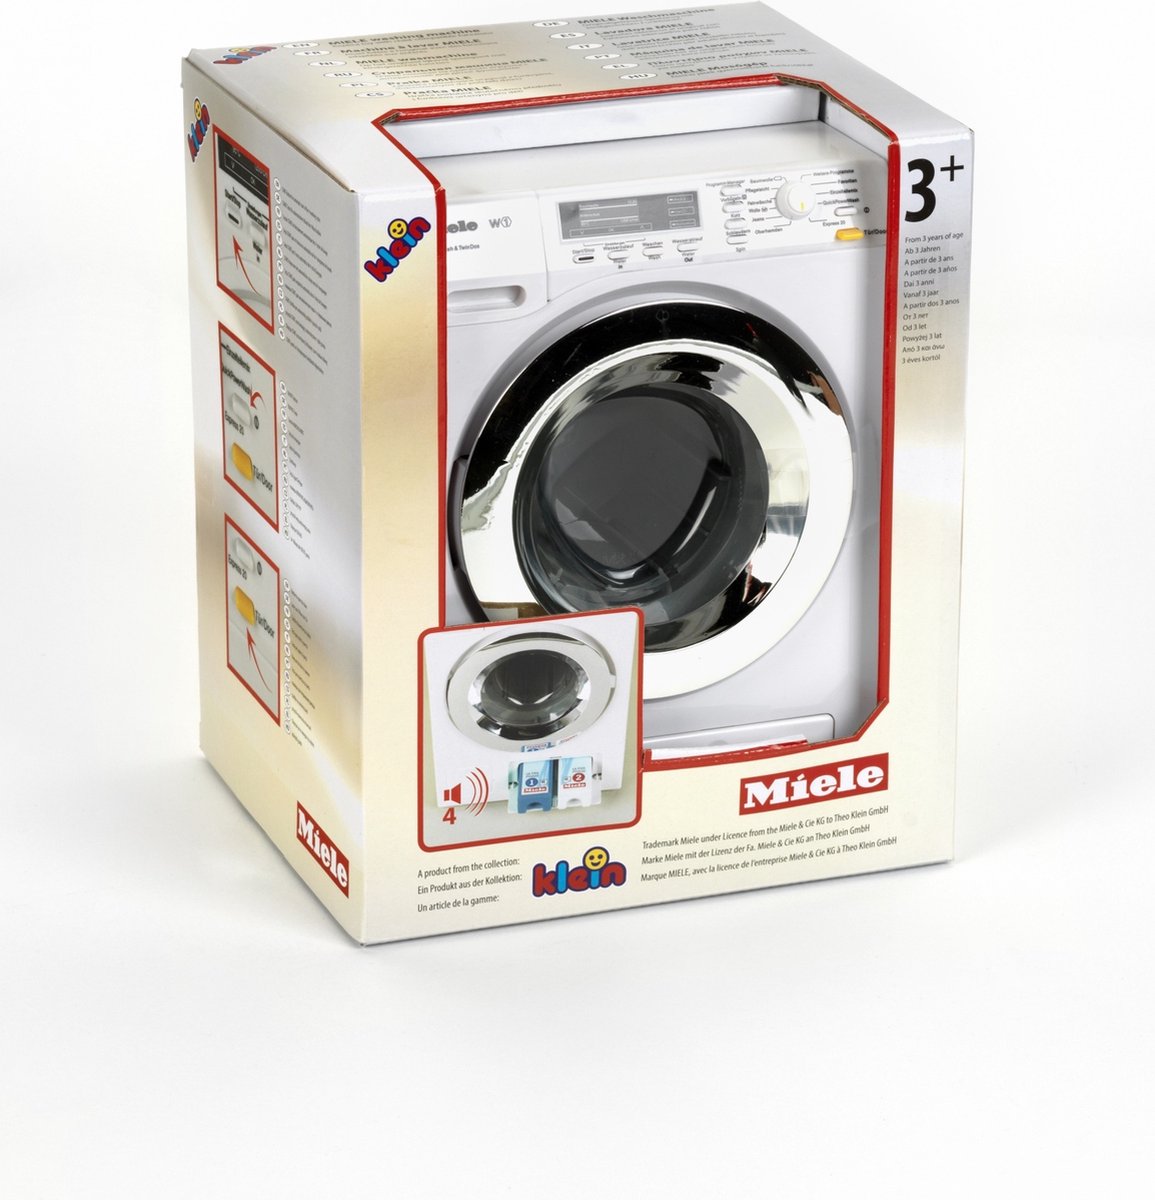 Theo Klein 6941 /TK6941 Klein MIELE wasmachine voor de poppenwas - Bruder- speelgoed.nl, het goedkope online adres voor speelgoed van de merken: Theo Klein Bruder, Schleich, Siku, Kids Globe, Tronico en Theo